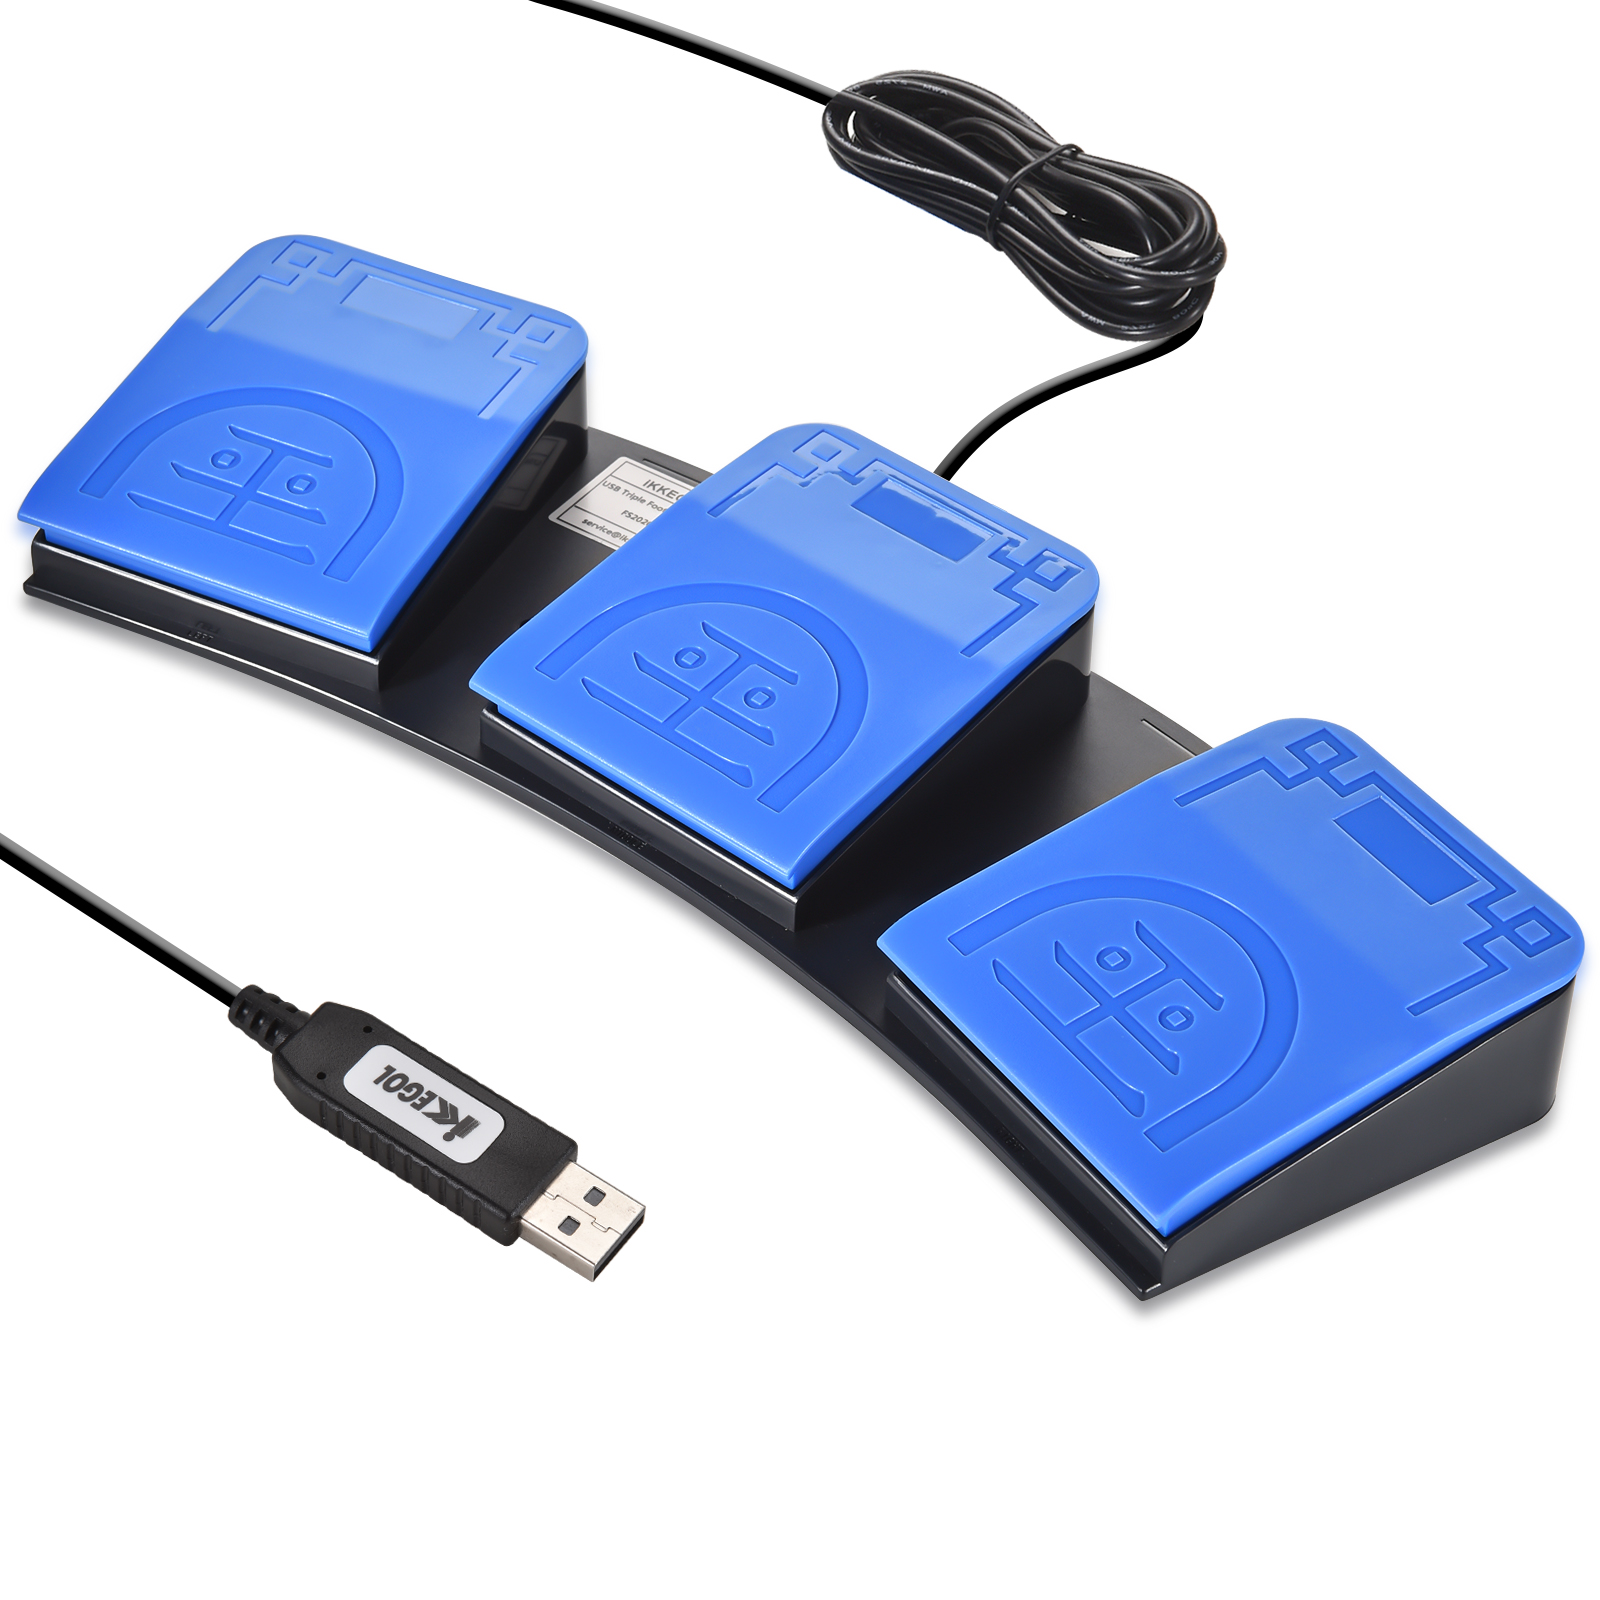 Upgraded] iKKEGOL USB Triple Foot Pedal Optical Switch [10725] - $39.99 